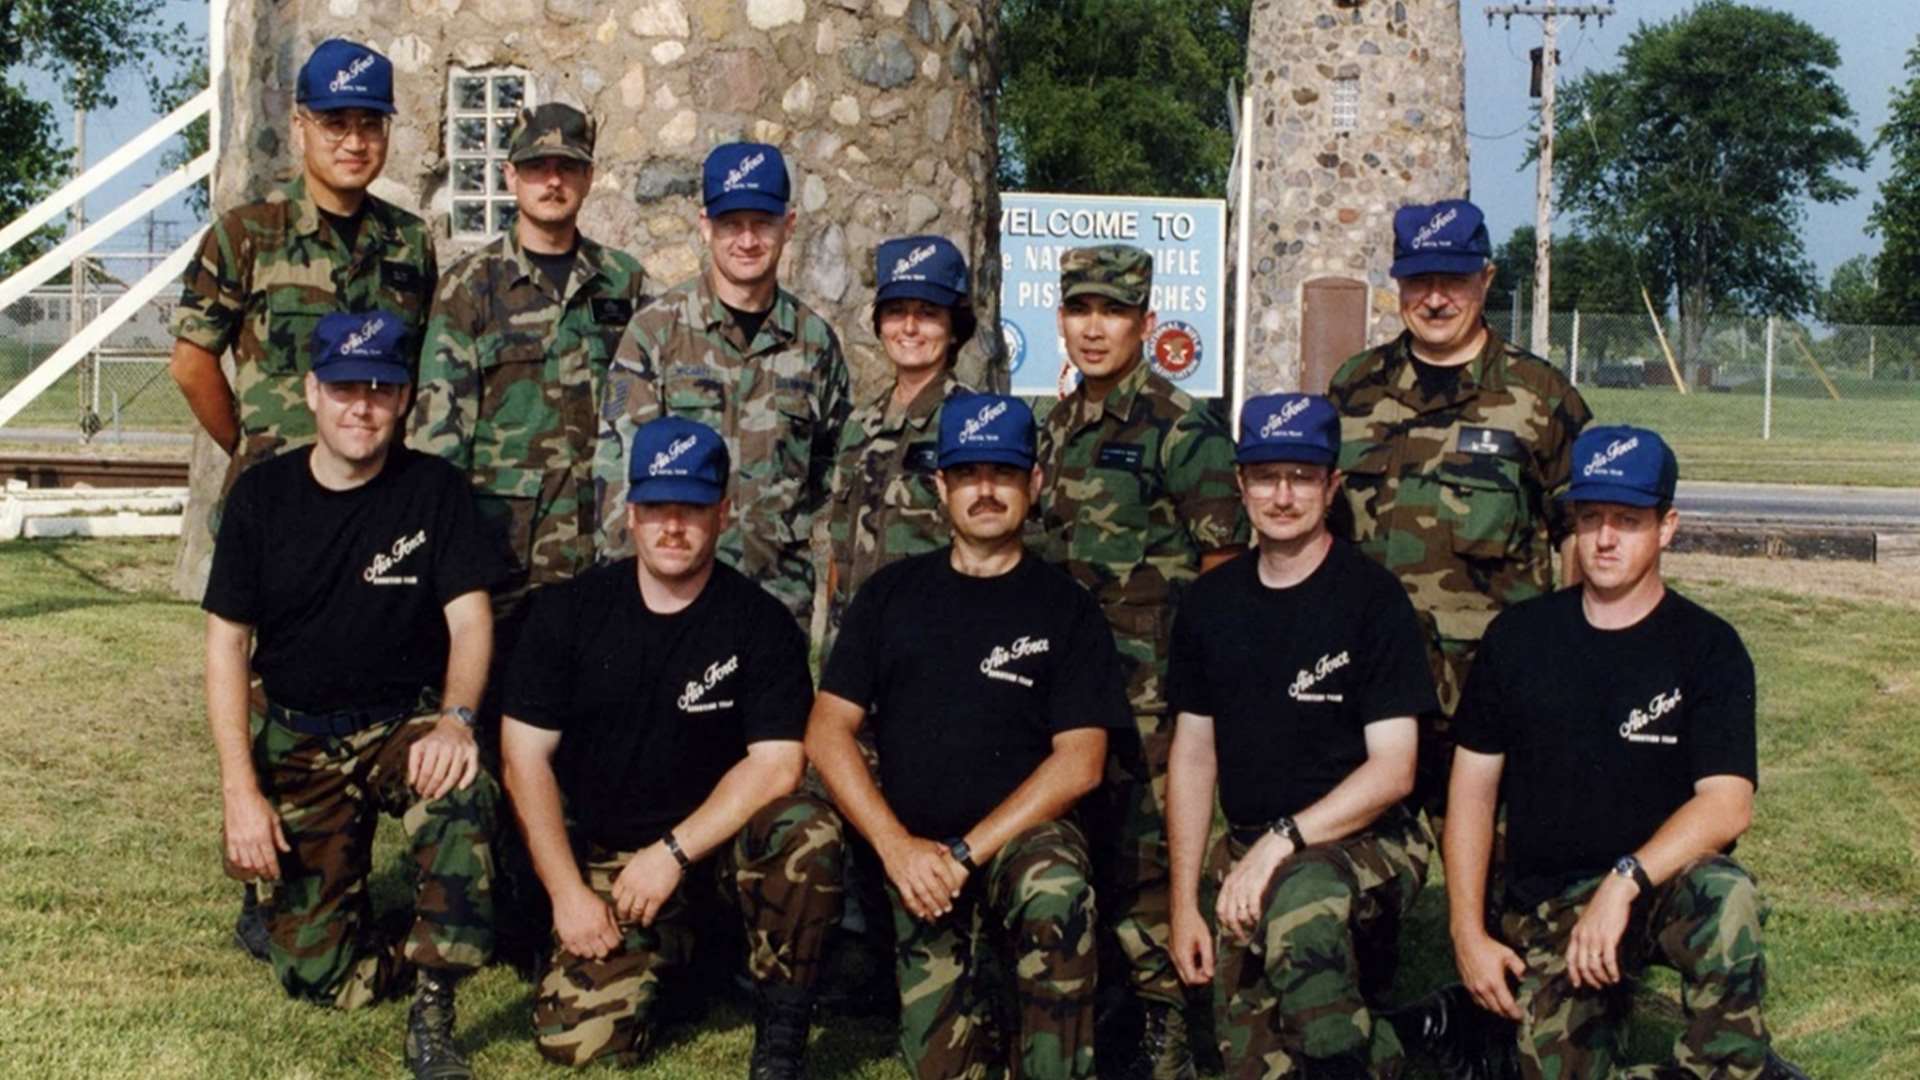 1994 Air Force pistol team